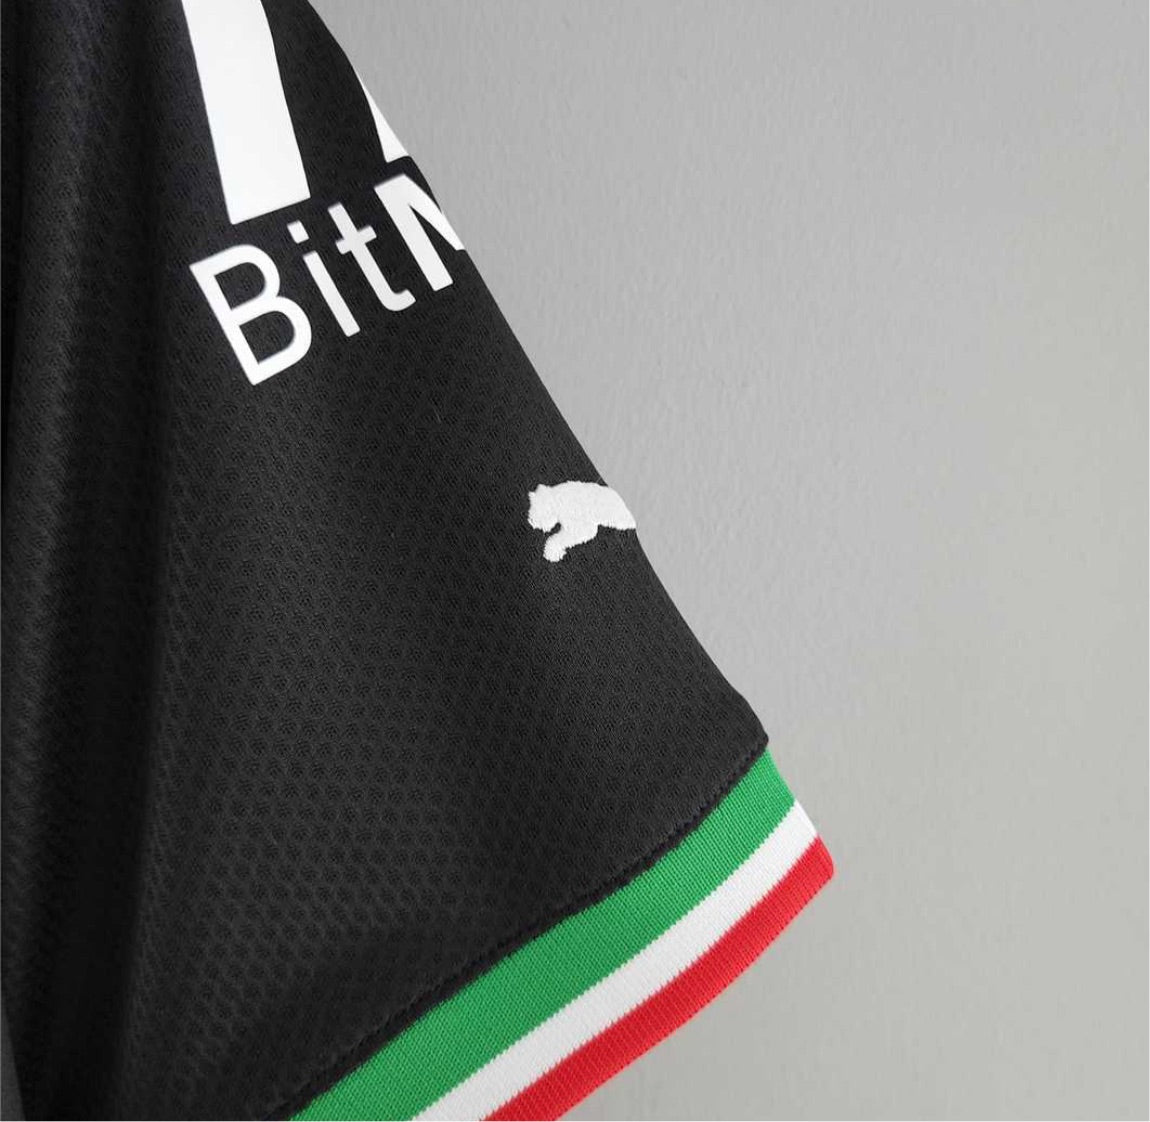 Zlatan Ibrahimović A.C Milan  2022/2023 Soccer Home Puma Player Jersey - Black